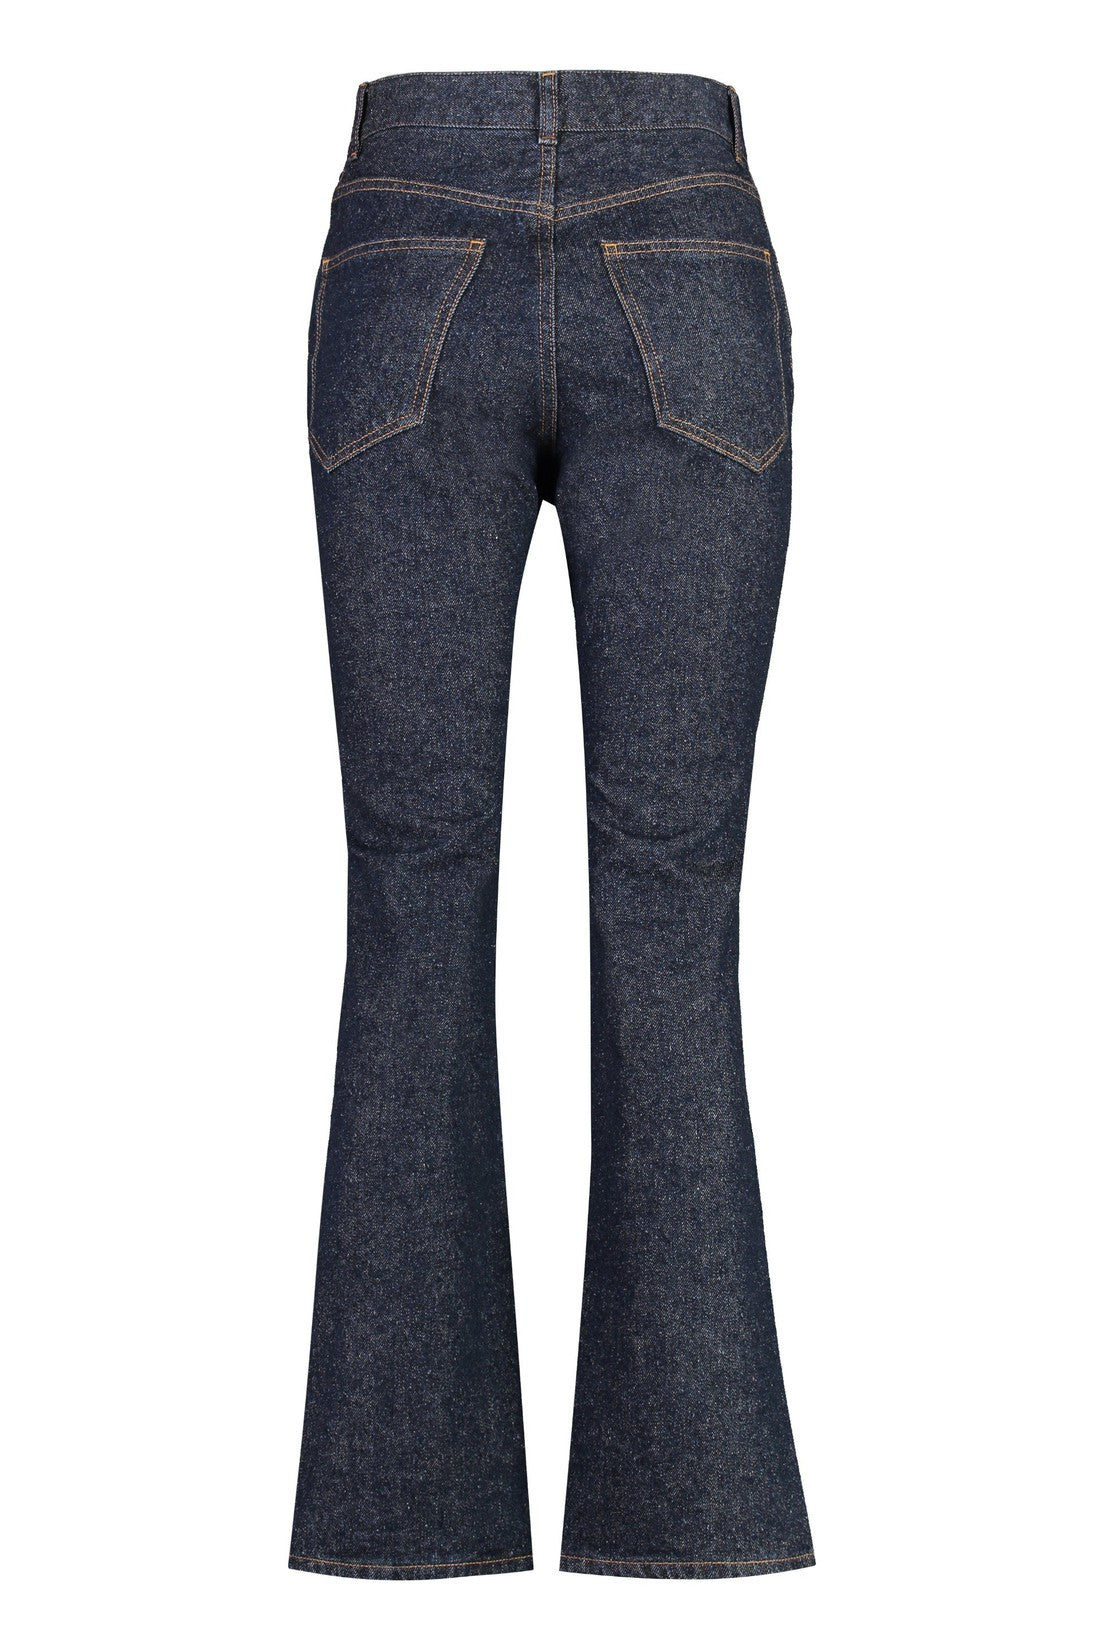 Chloé-OUTLET-SALE-High-rise flared jeans-ARCHIVIST